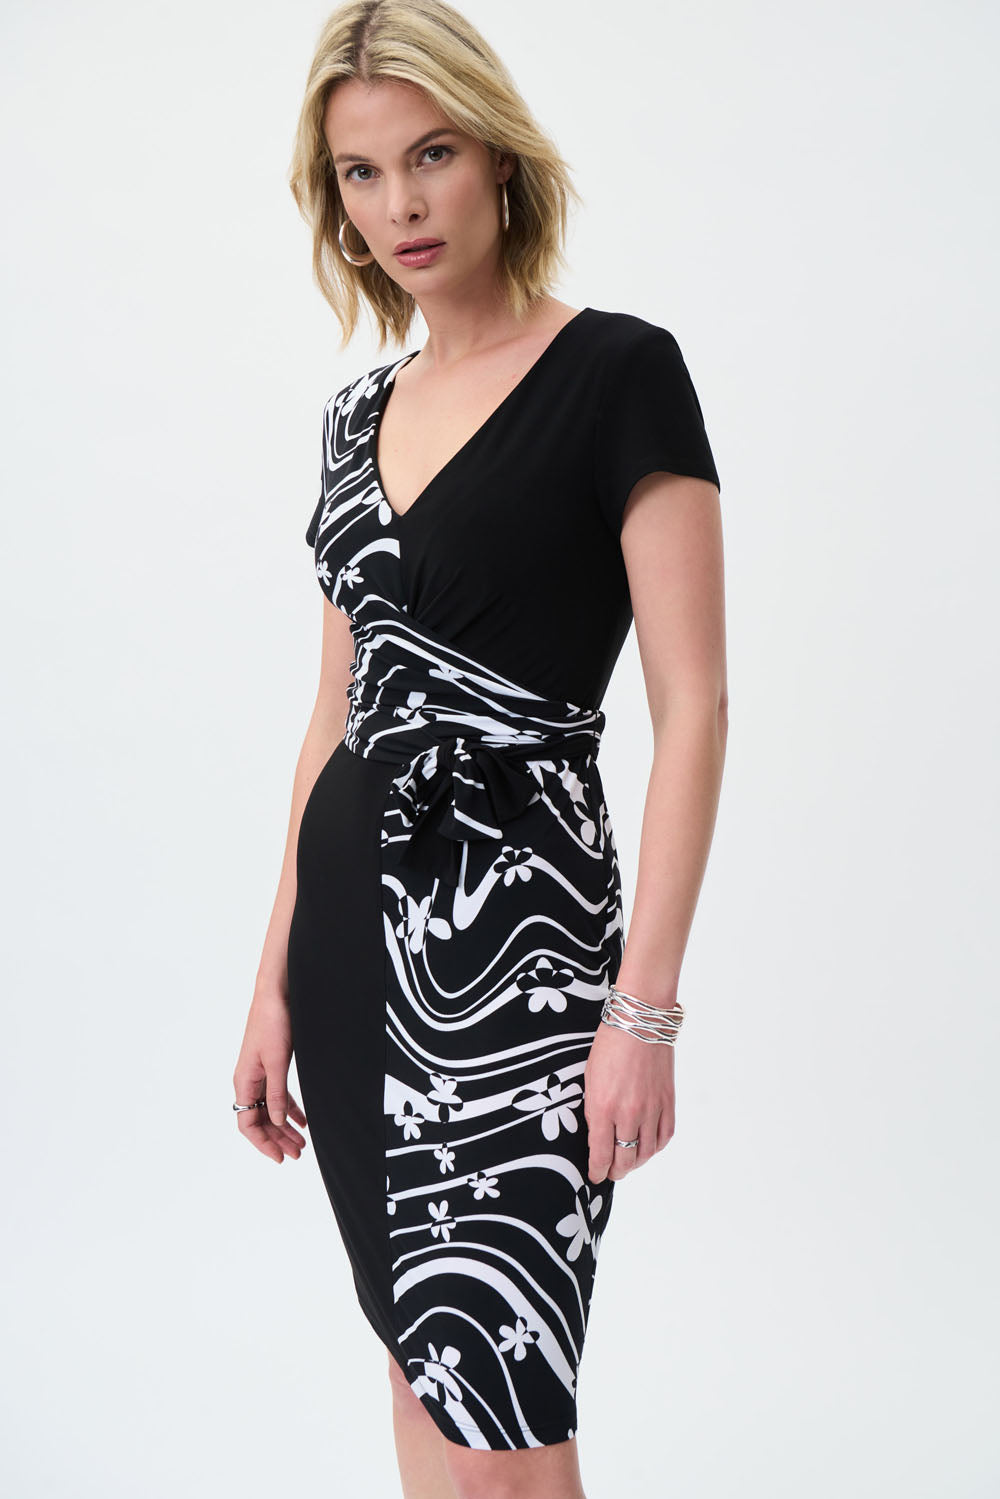 Joseph Ribkoff Black-Vanilla Dress Style 231044